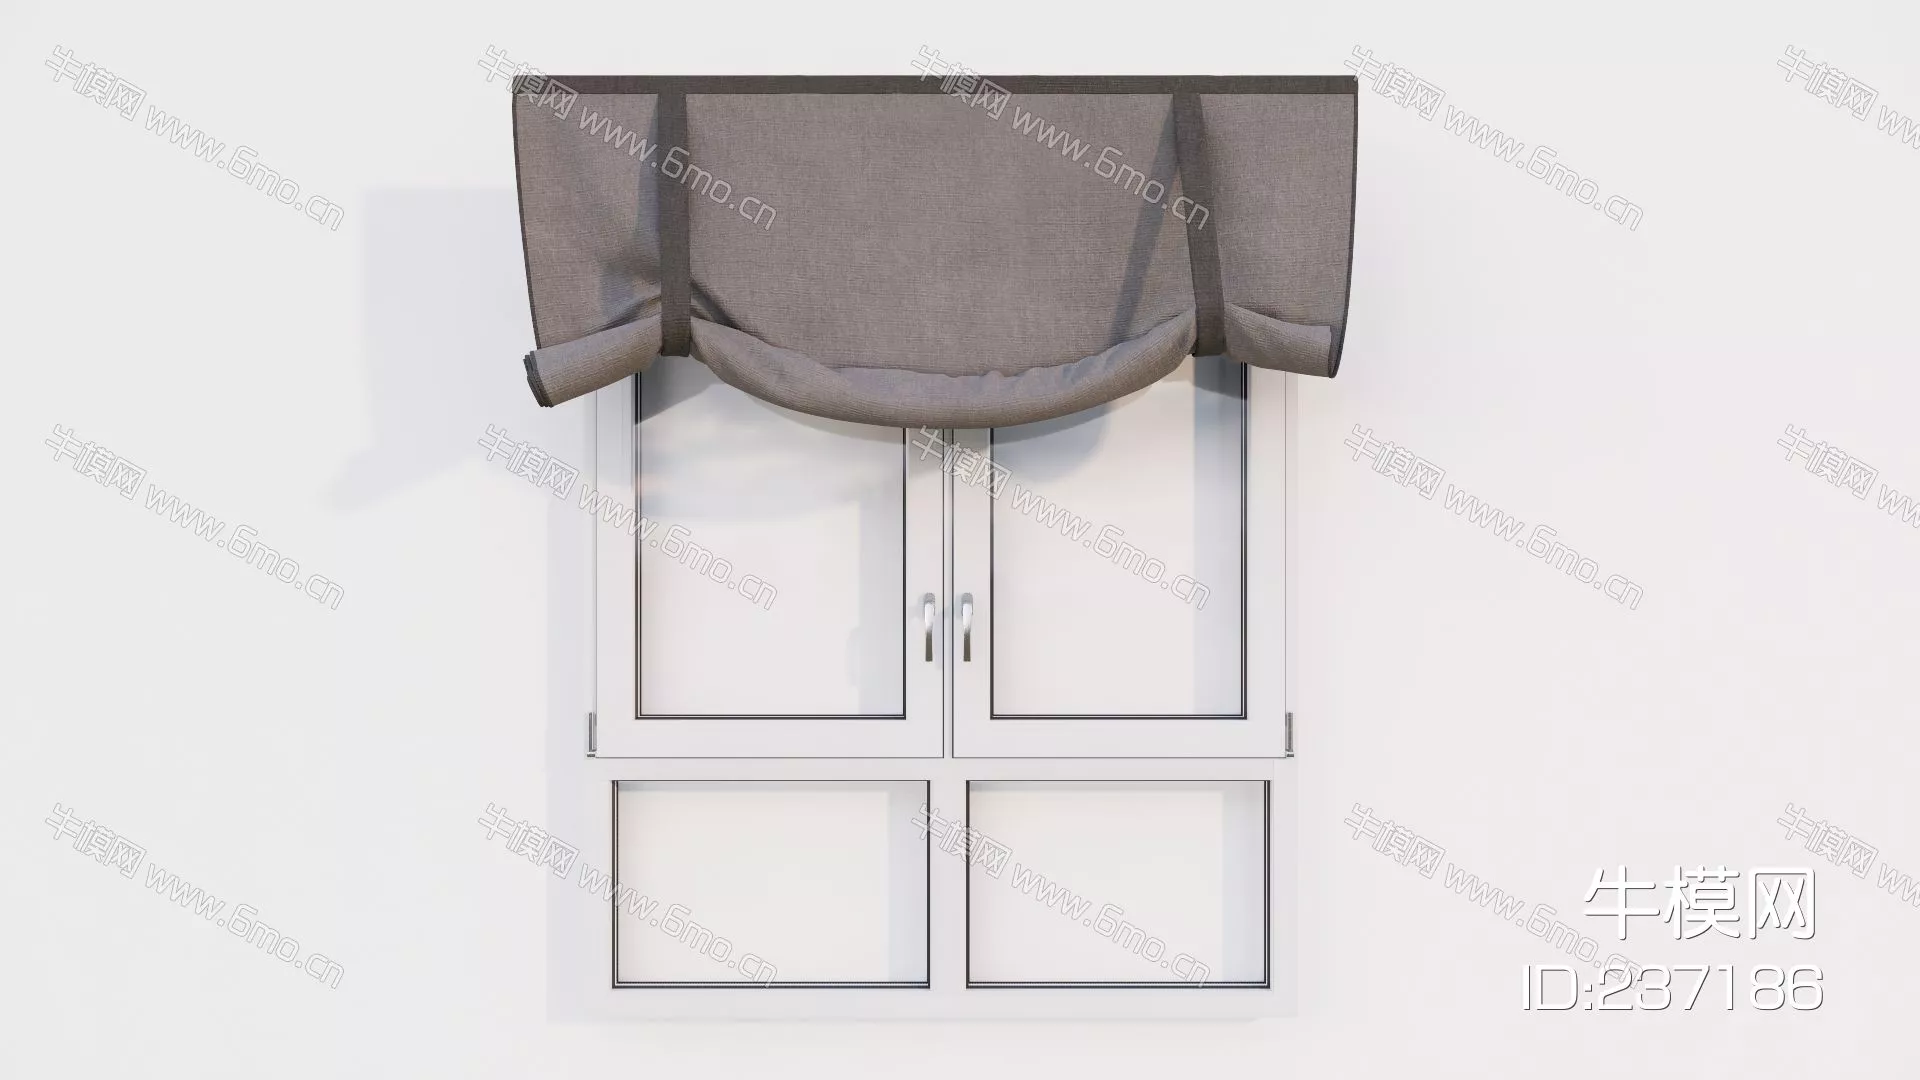 MODERN DOOR AND WINDOWS - SKETCHUP 3D MODEL - ENSCAPE - 237186